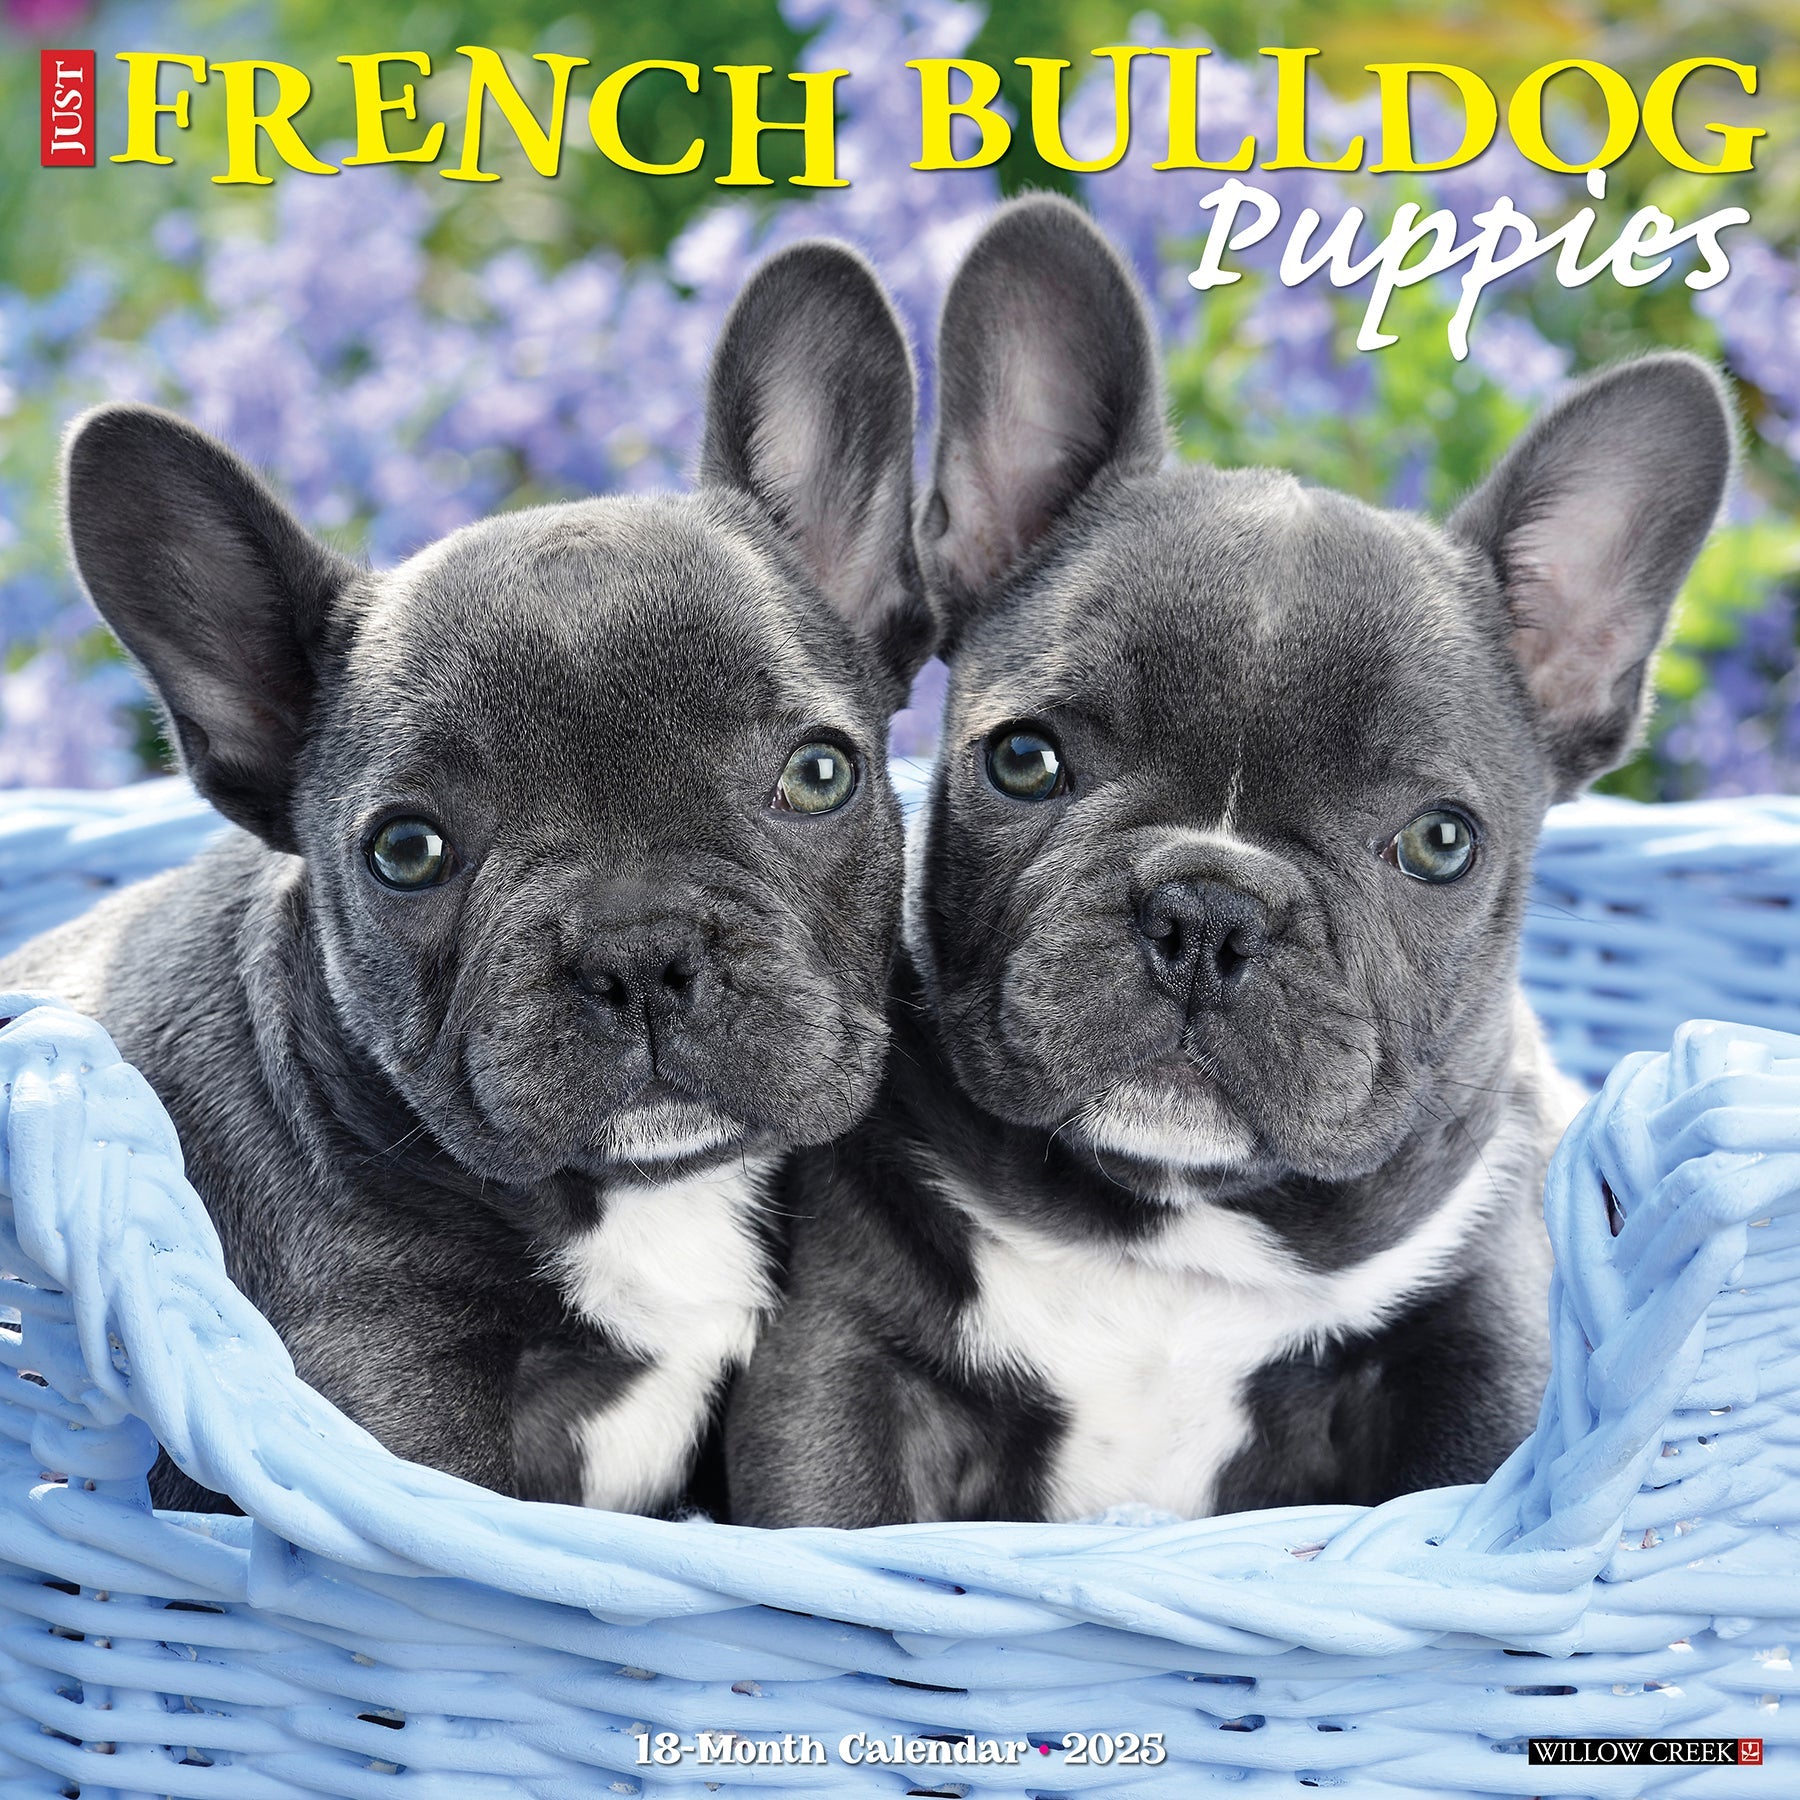 2025 French Bulldog Puppies - Square Wall Calendar